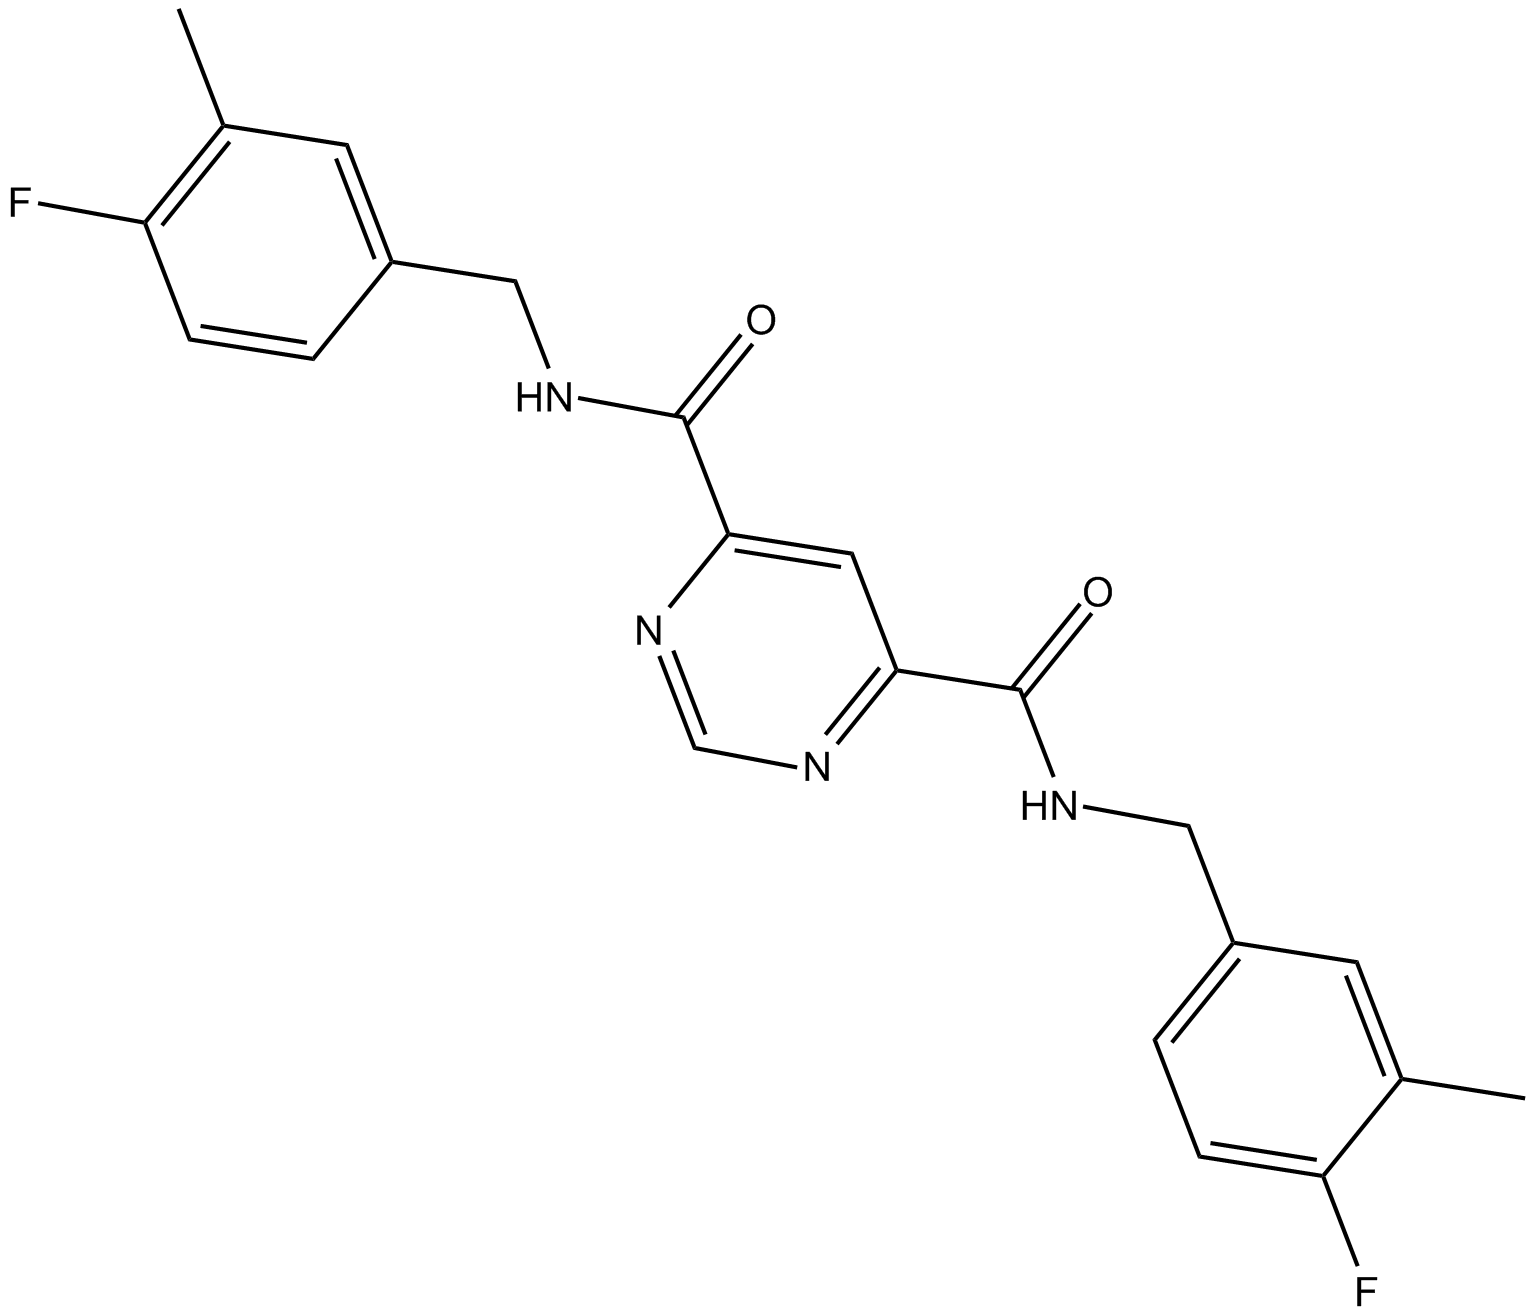 MMP-13 Inhibitor